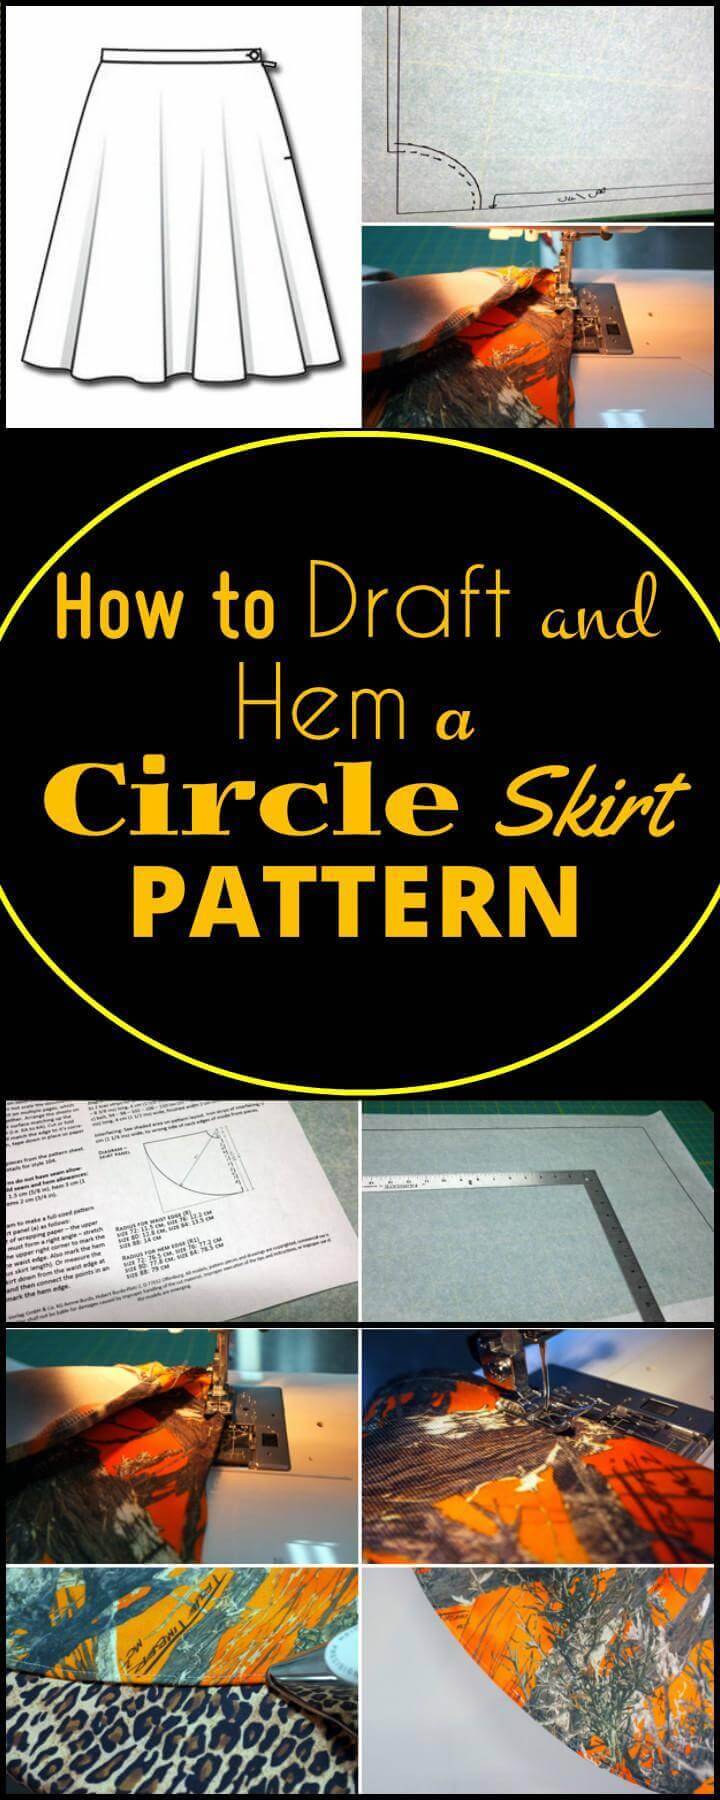 DIY how to draft and hem a circle skirt